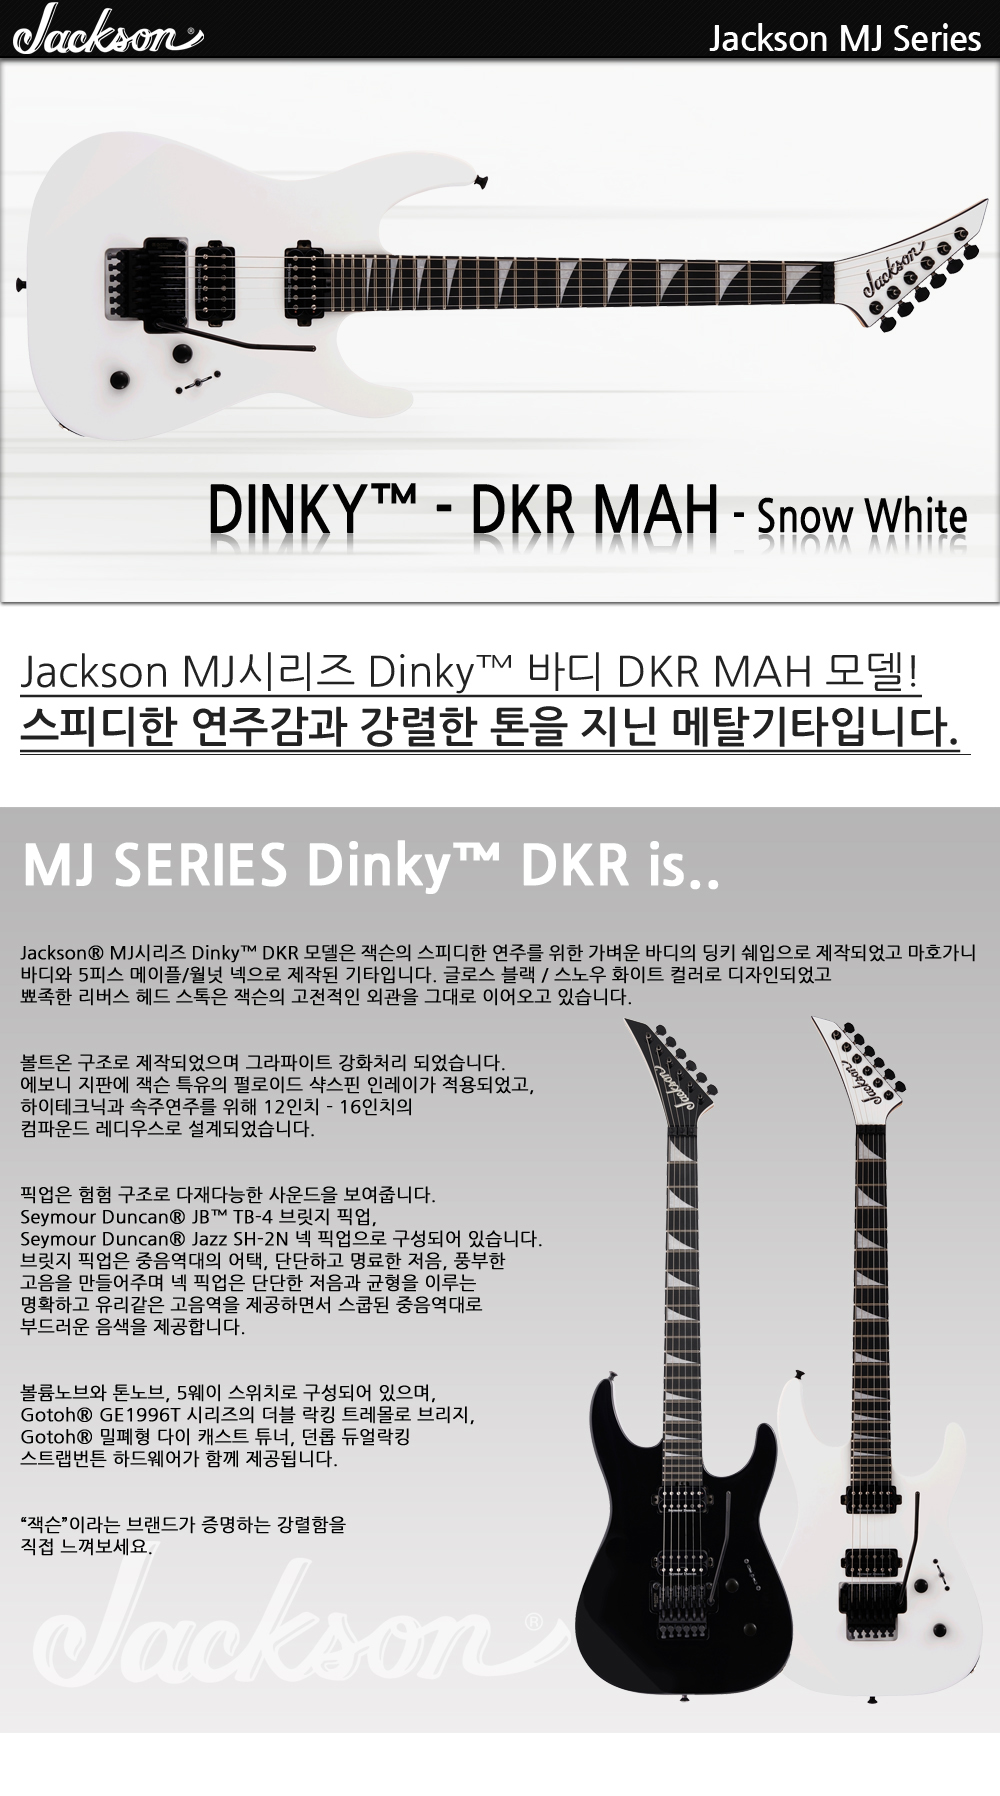 Jackson-MJ-Dinky-DKR-MAH-SnowWhite_1_171925.jpg